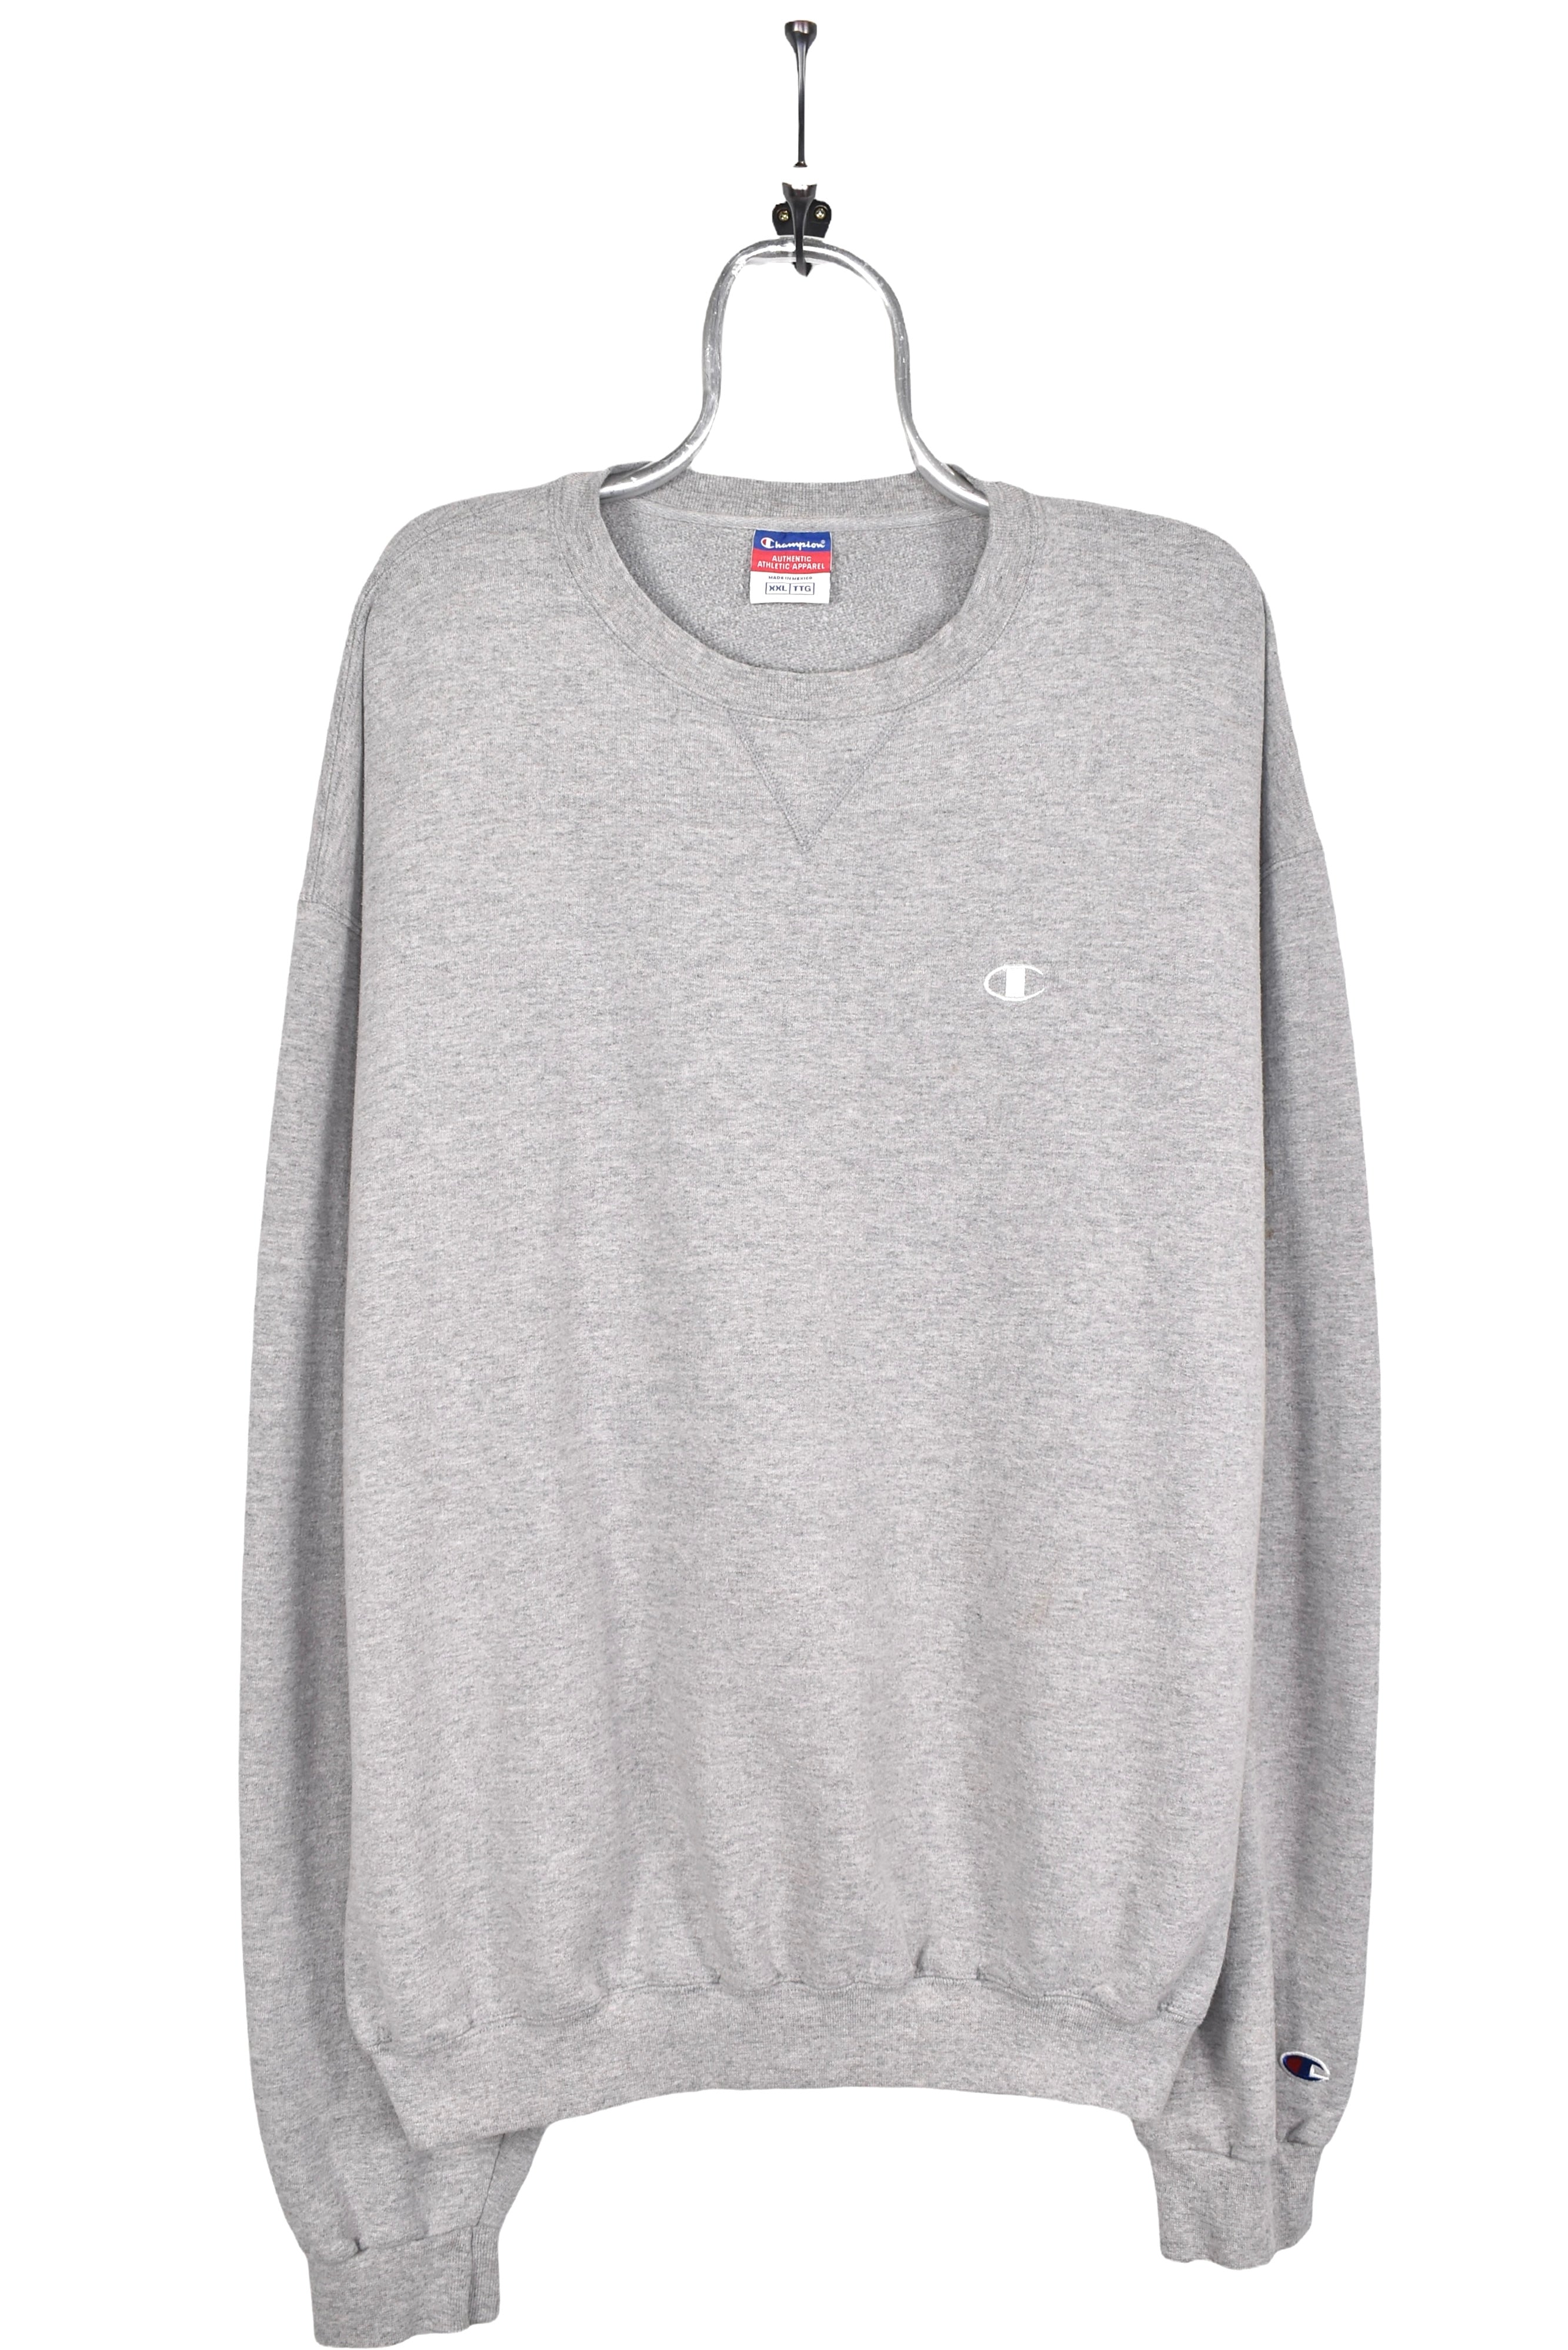 Vintage Champion sweatshirt, basic grey embroidered crewneck - AU XXL CHAMPION